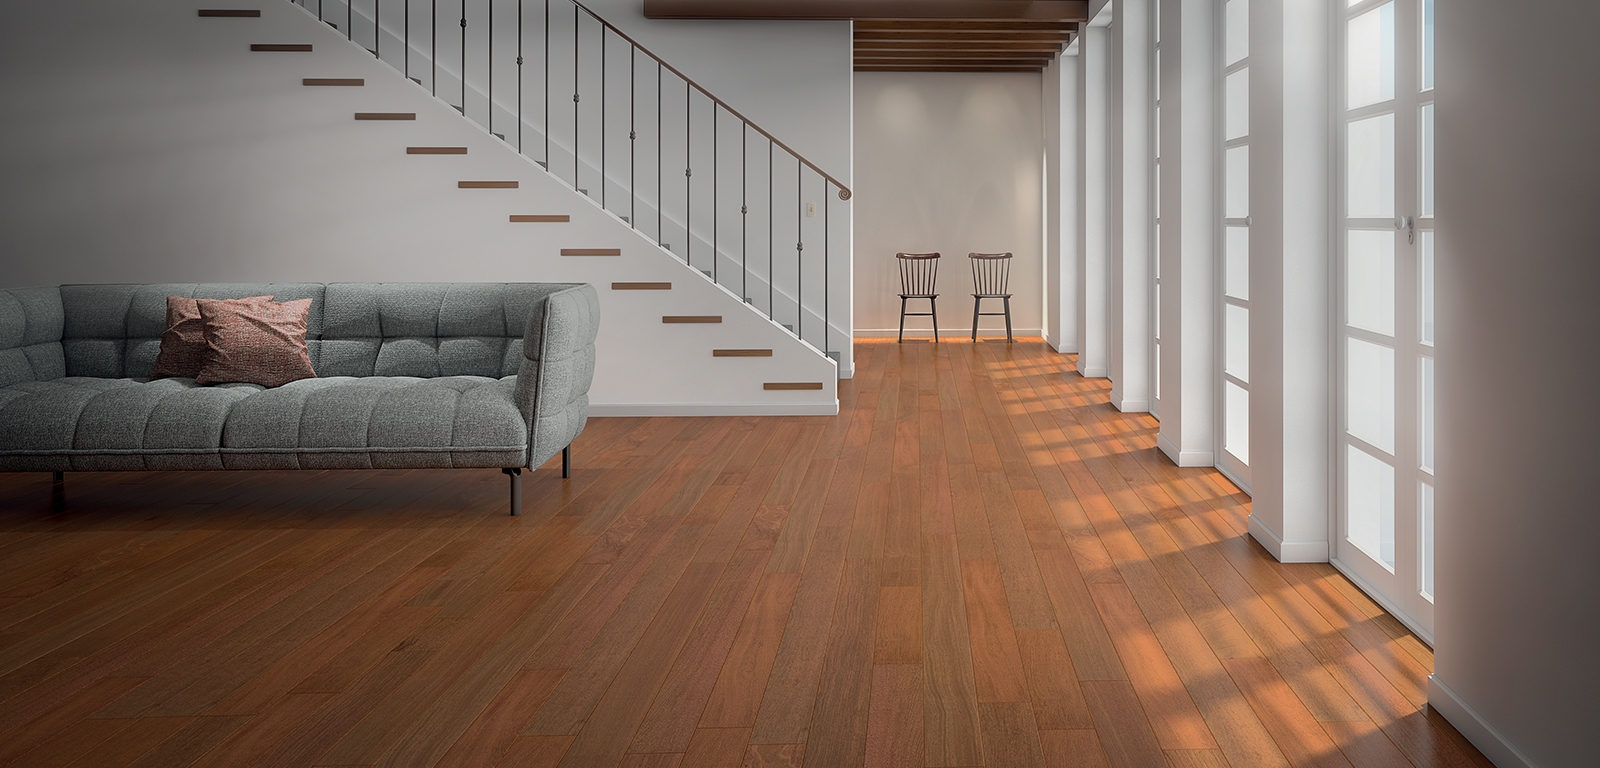 Photograph of beautiful brazilian cherry hardwood flooring in a home.